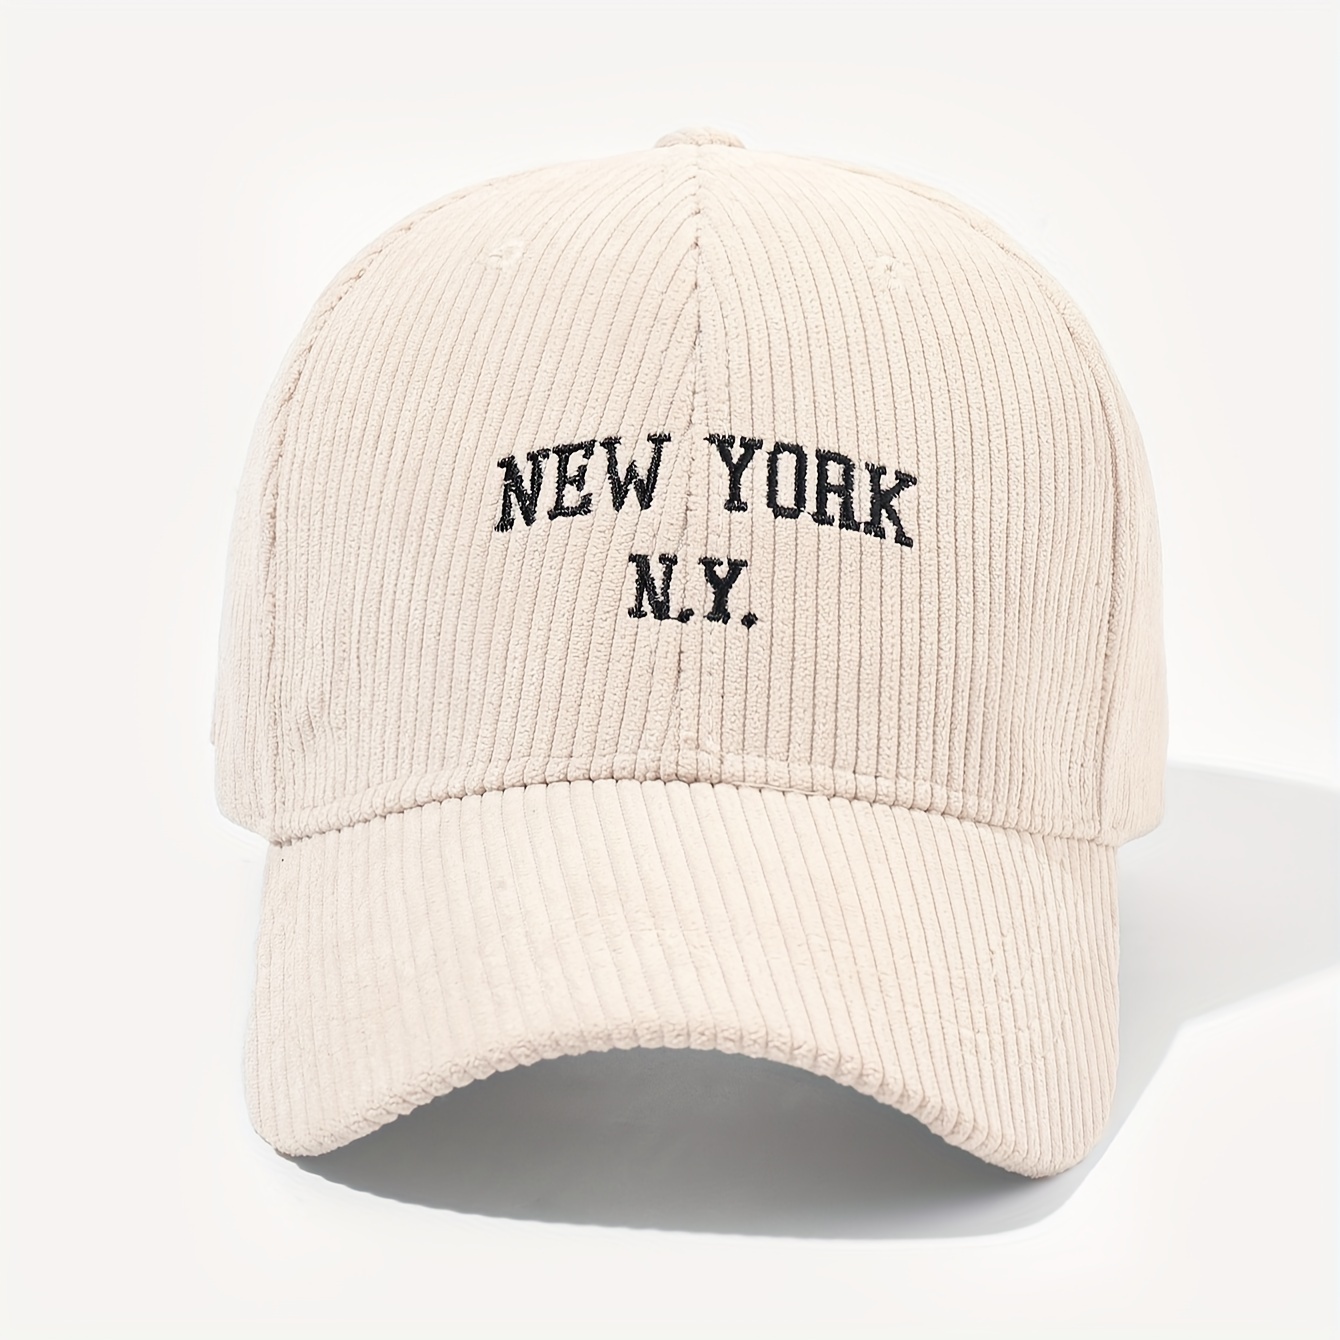 

New York Slogan Embroidery Baseball Cap Trendy Beige Corduroy Hats Lightweight Adjustable Dad Hat For Women Men